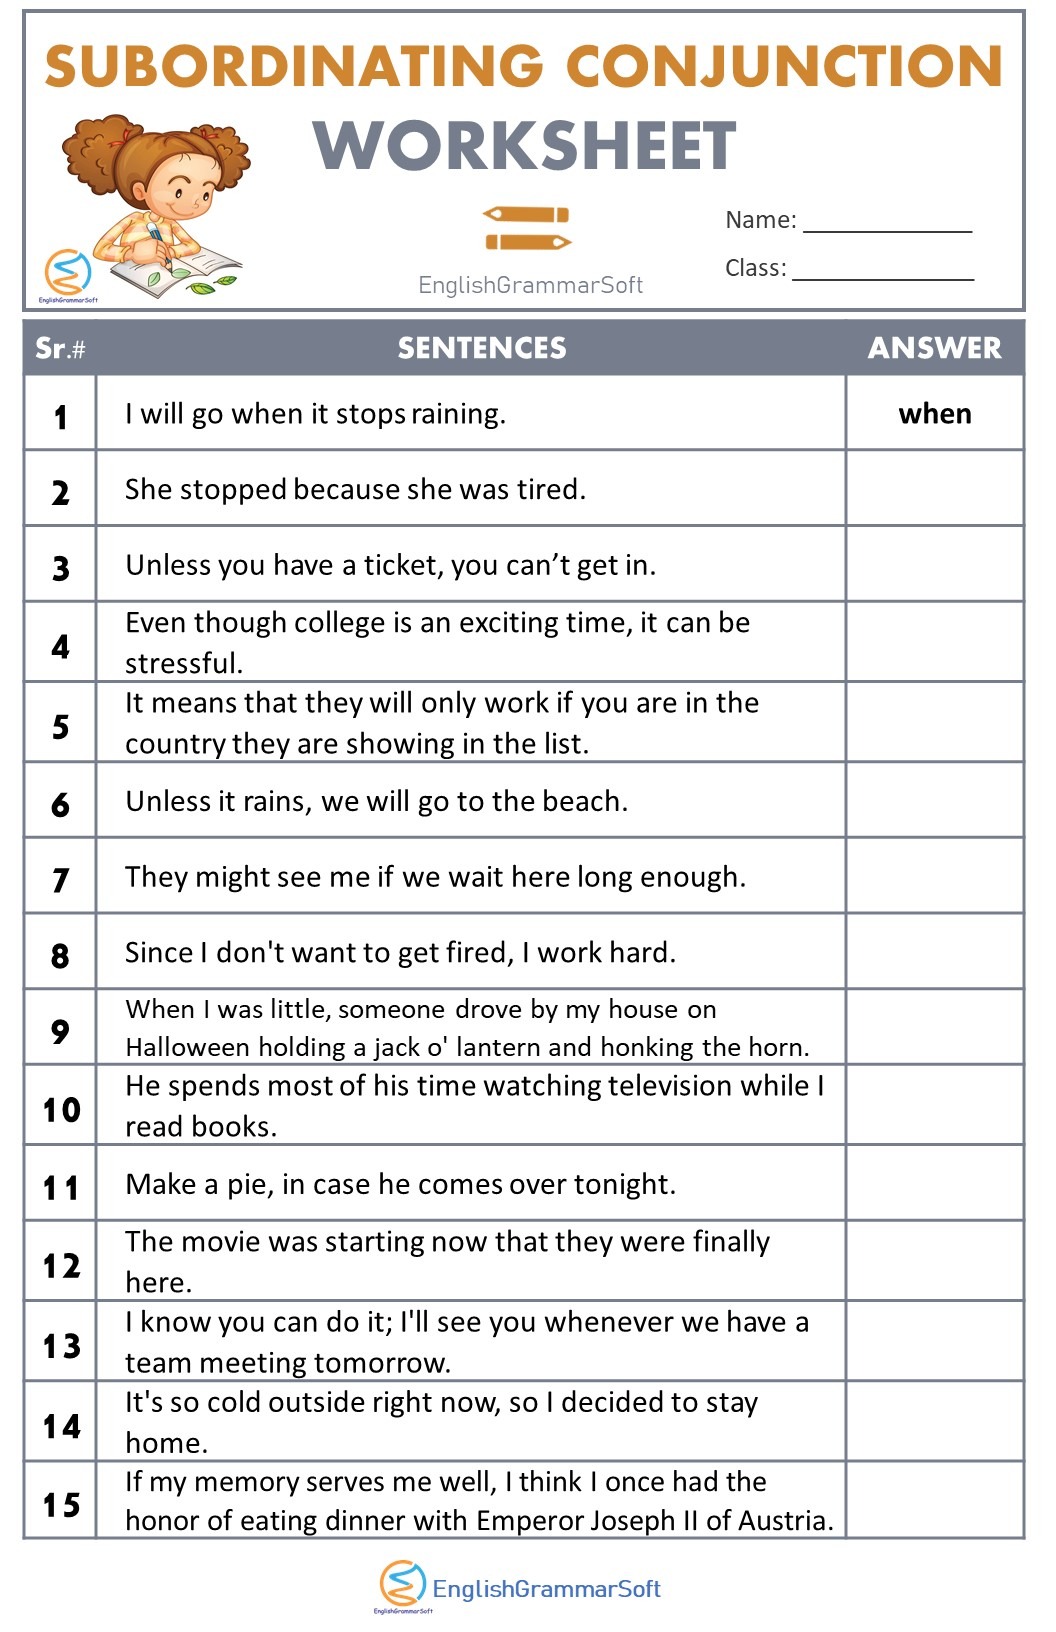 Subordinating Conjunction Worksheet